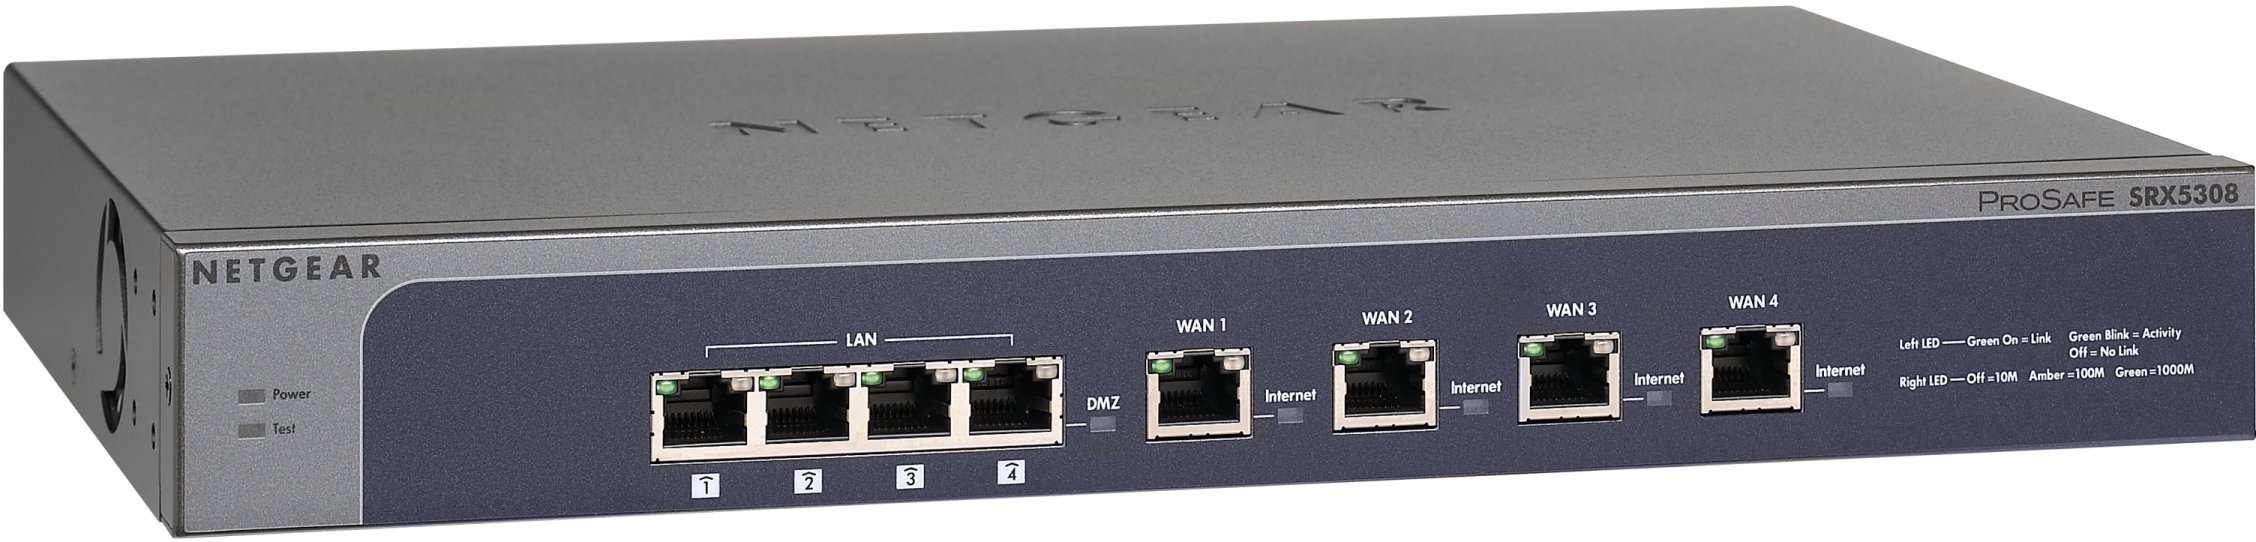 NETGEAR ProSAFE SRX5308 Quad WAN VPN Firewall with SSL and IPSec VPN (SRX5308-100NAS)